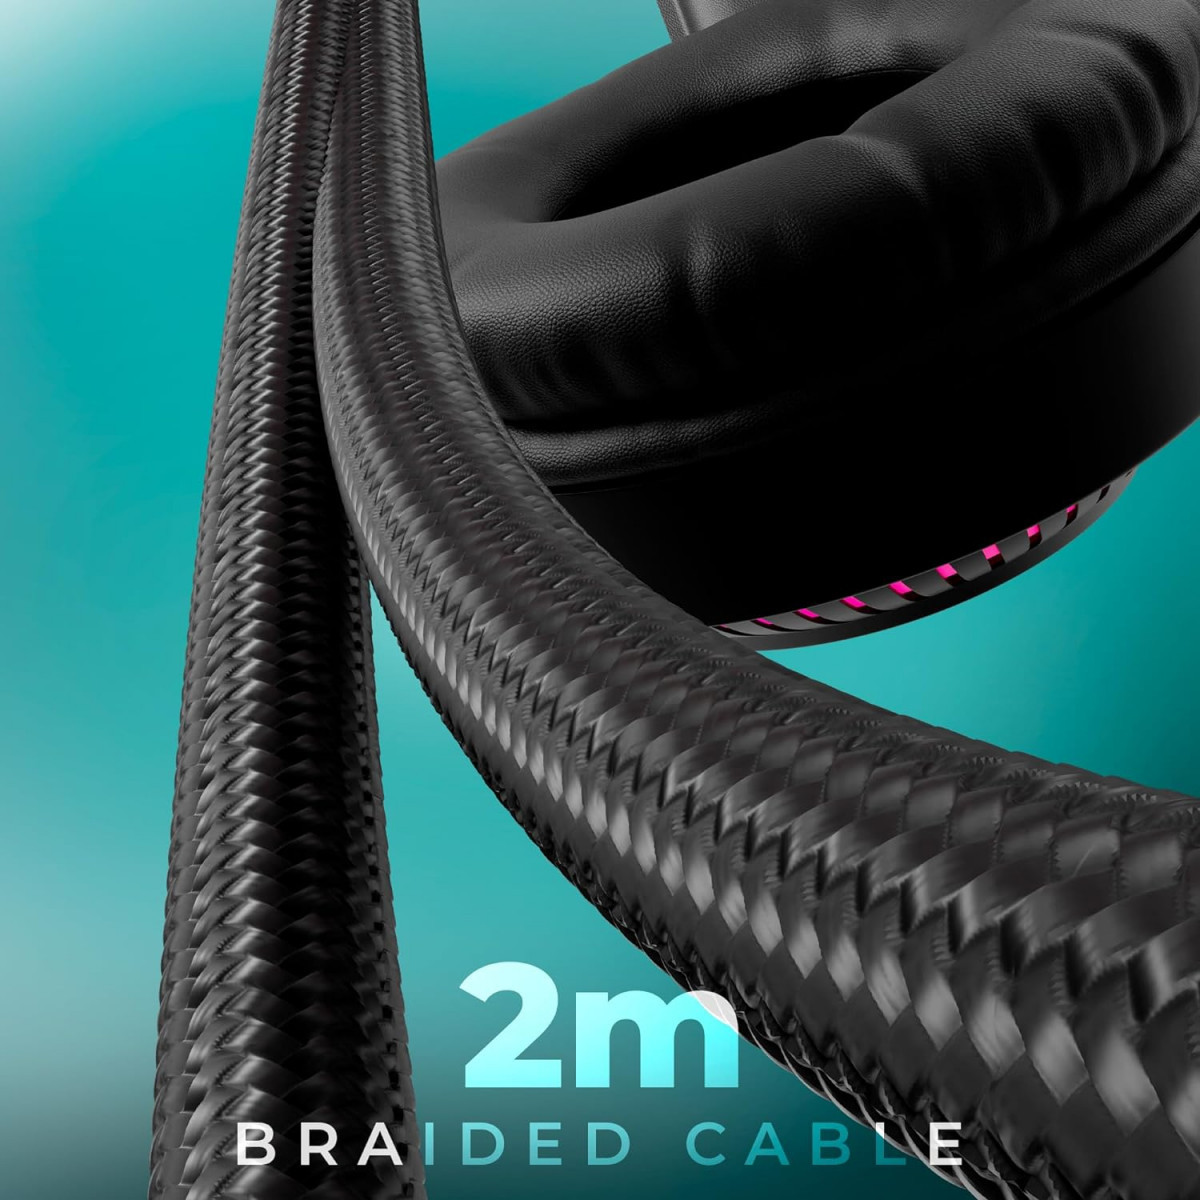 ZEBRONICS Jupiter 35mm Premium Gaming Over Ear Headphone Black